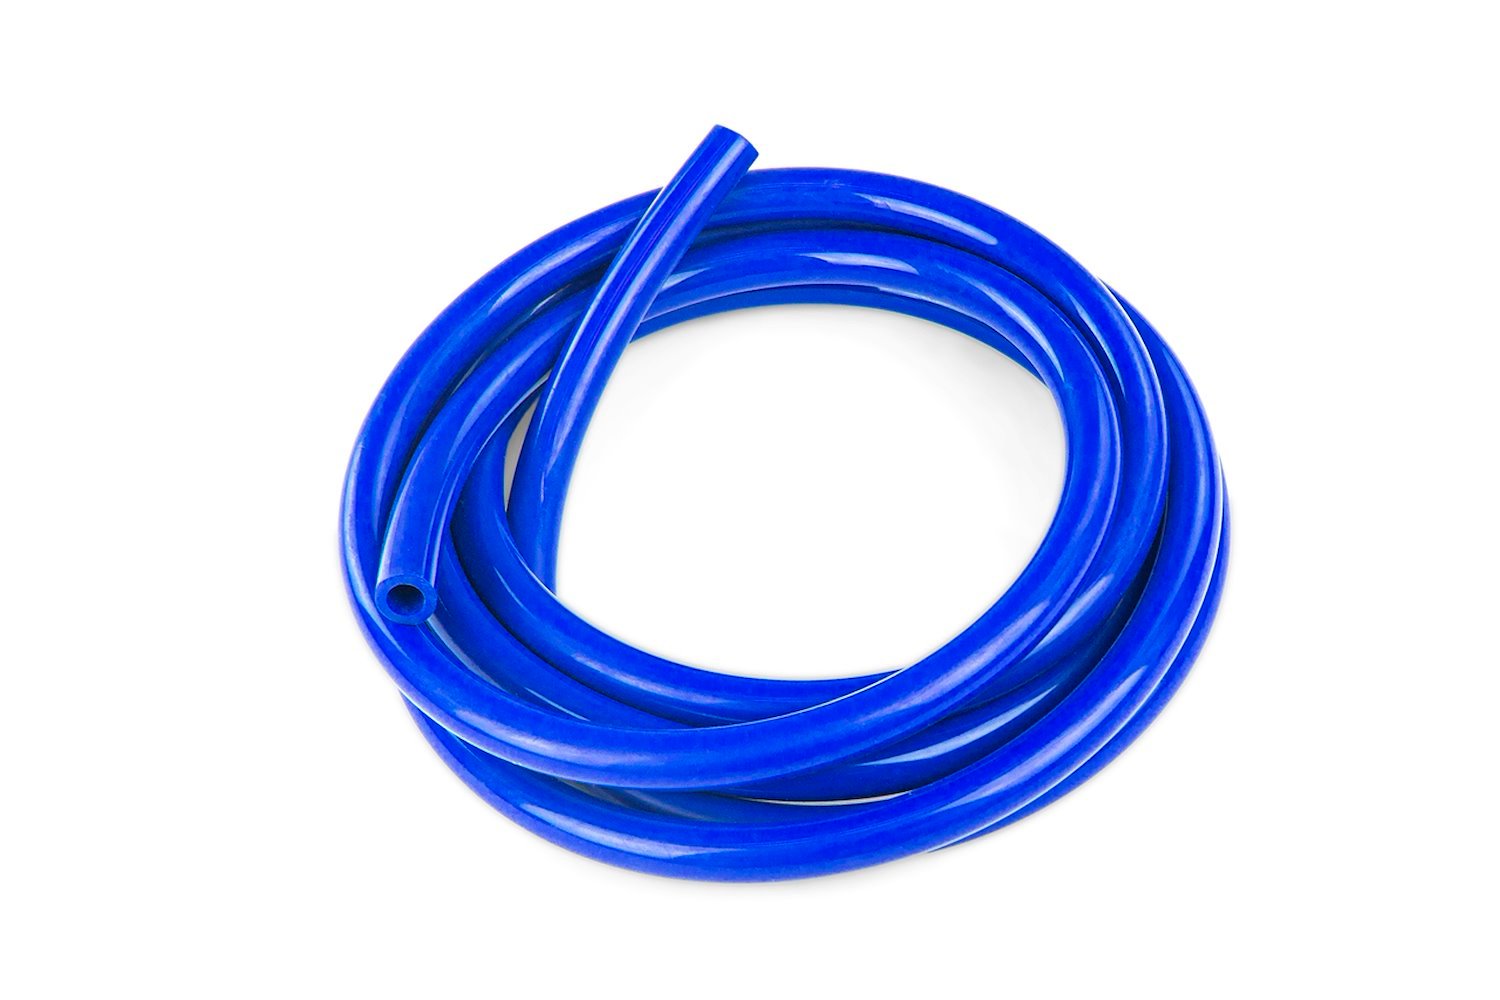 HTSVH10-BLUEx10 High-Temperature Silicone Vacuum Hose Tubing, 10 mm ID, 10 ft. Roll, Blue